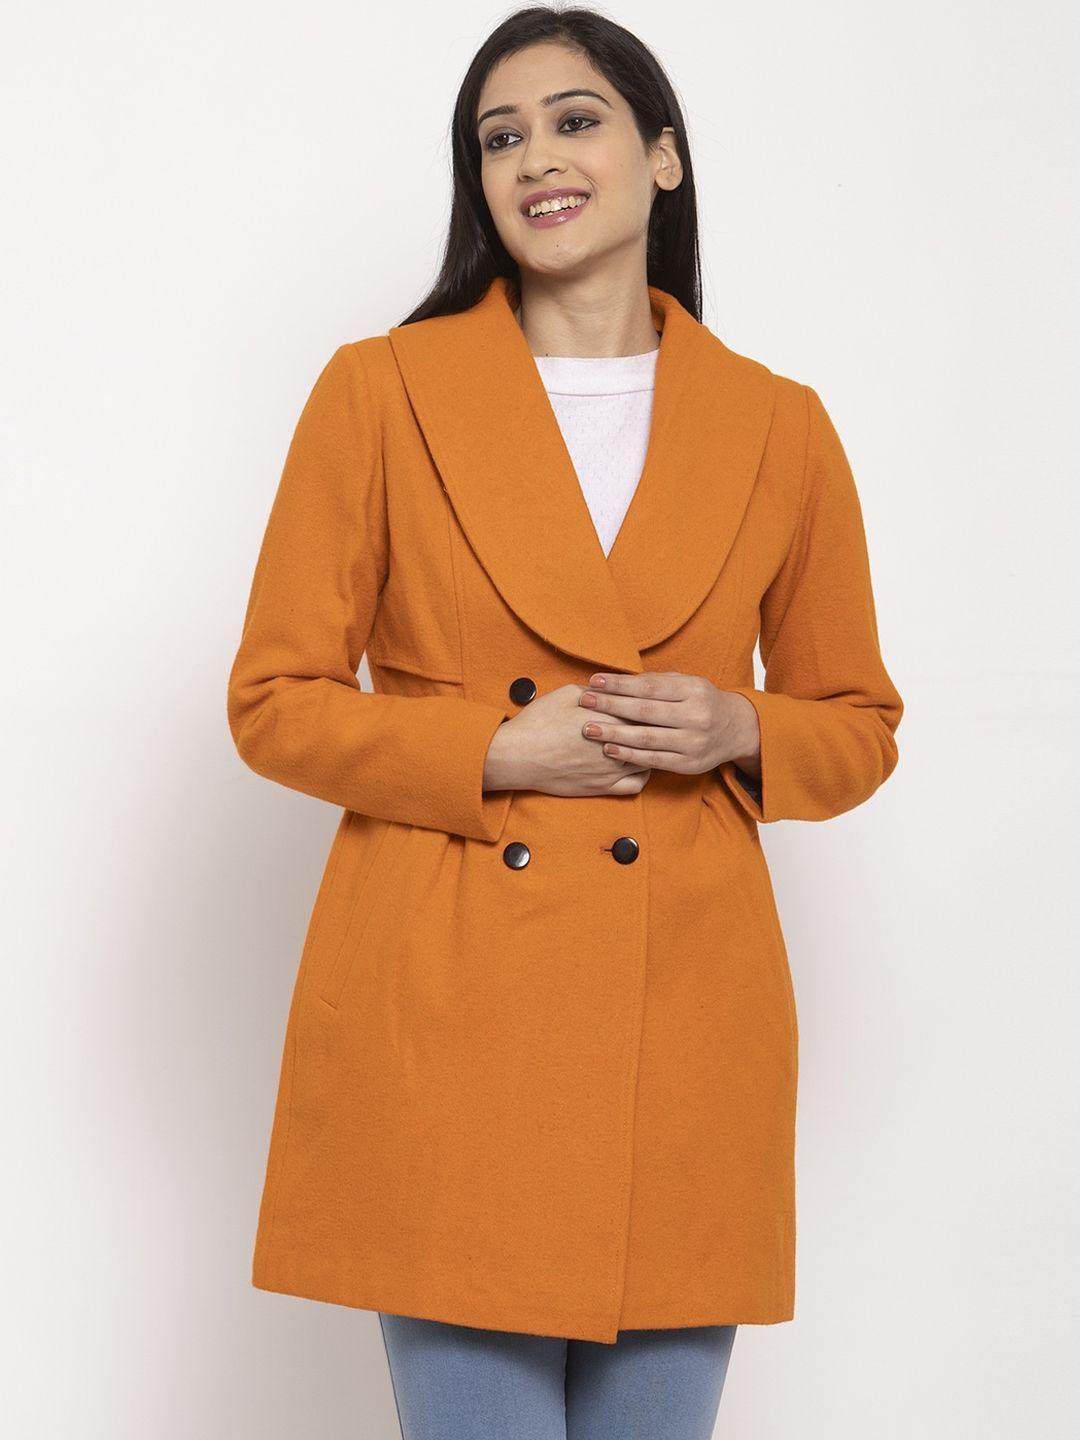 owncraft women orange solid longline pea coat